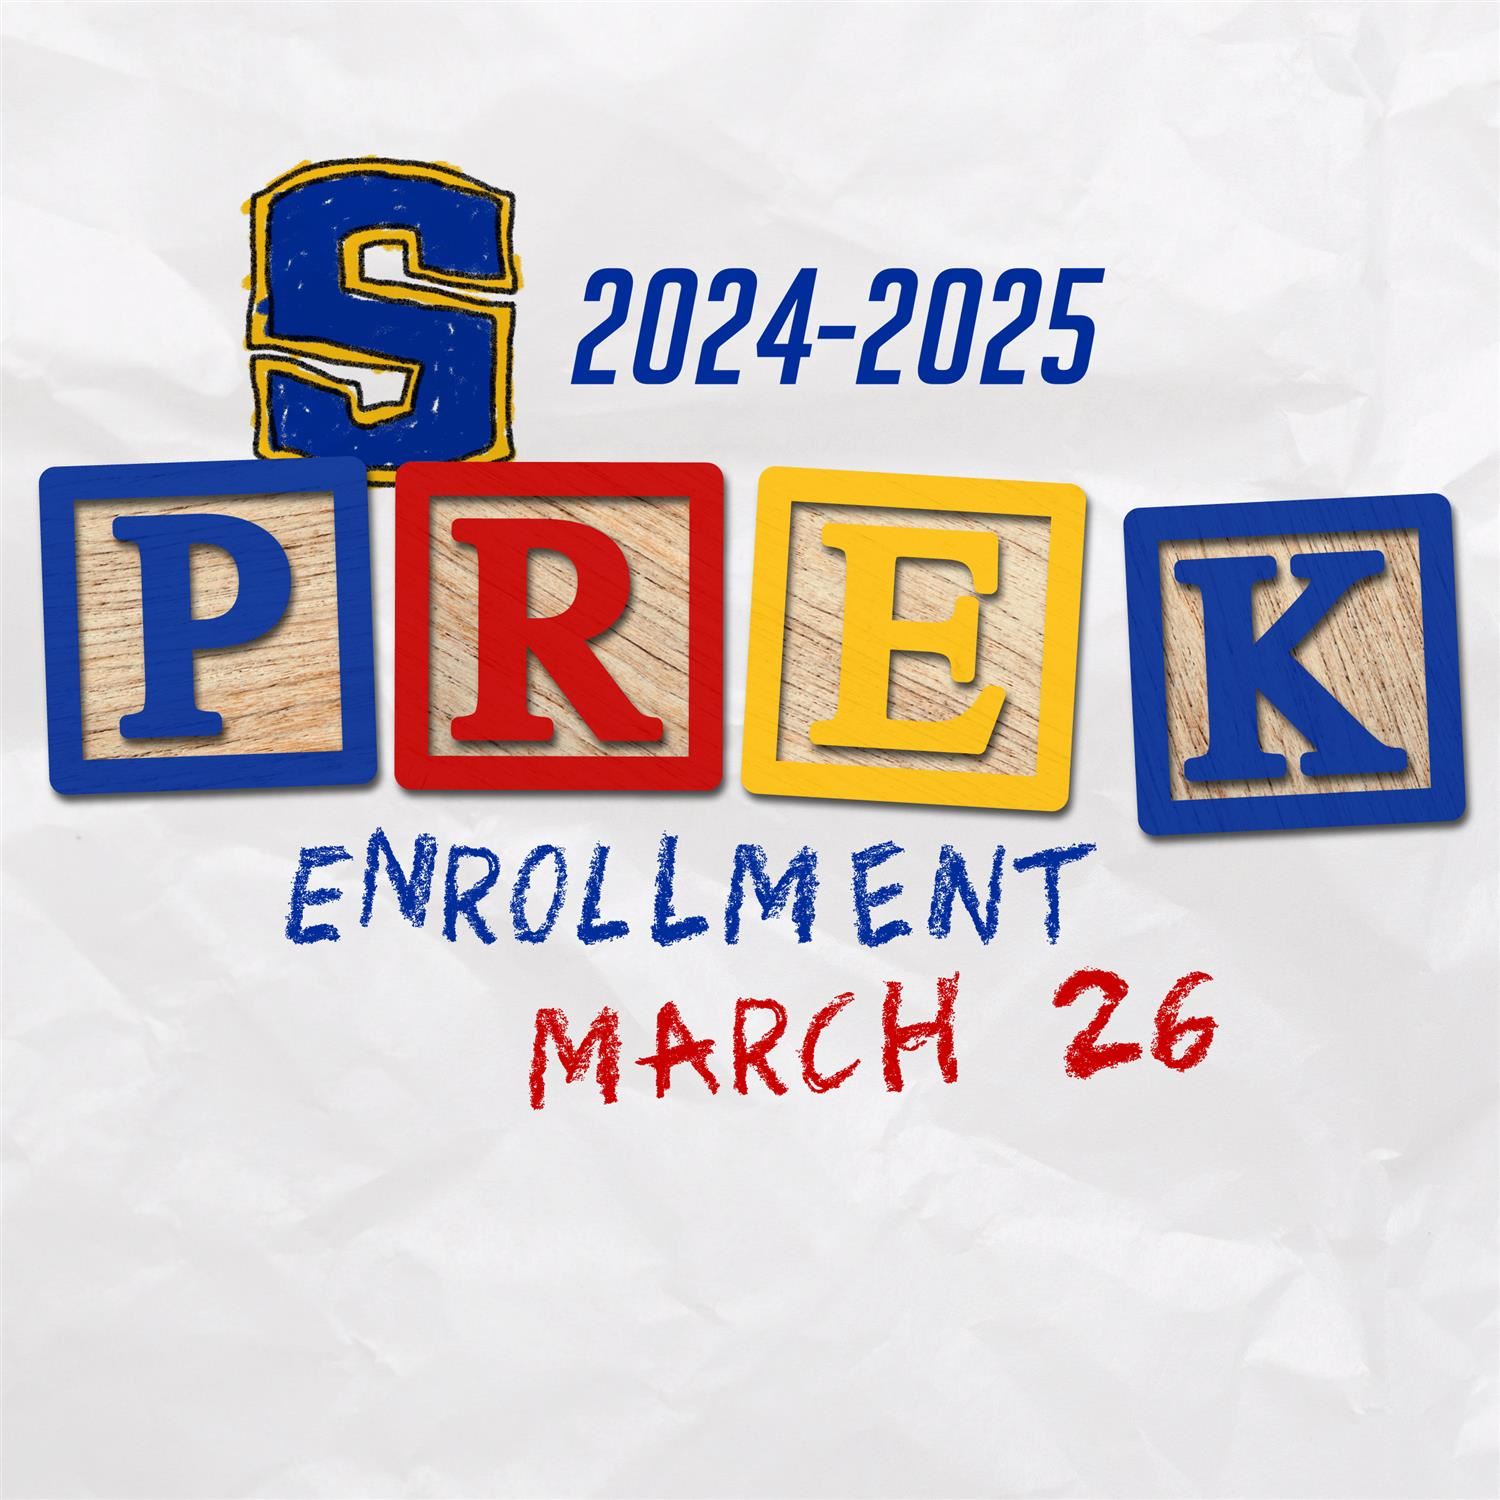 PreK Enrollment March 26